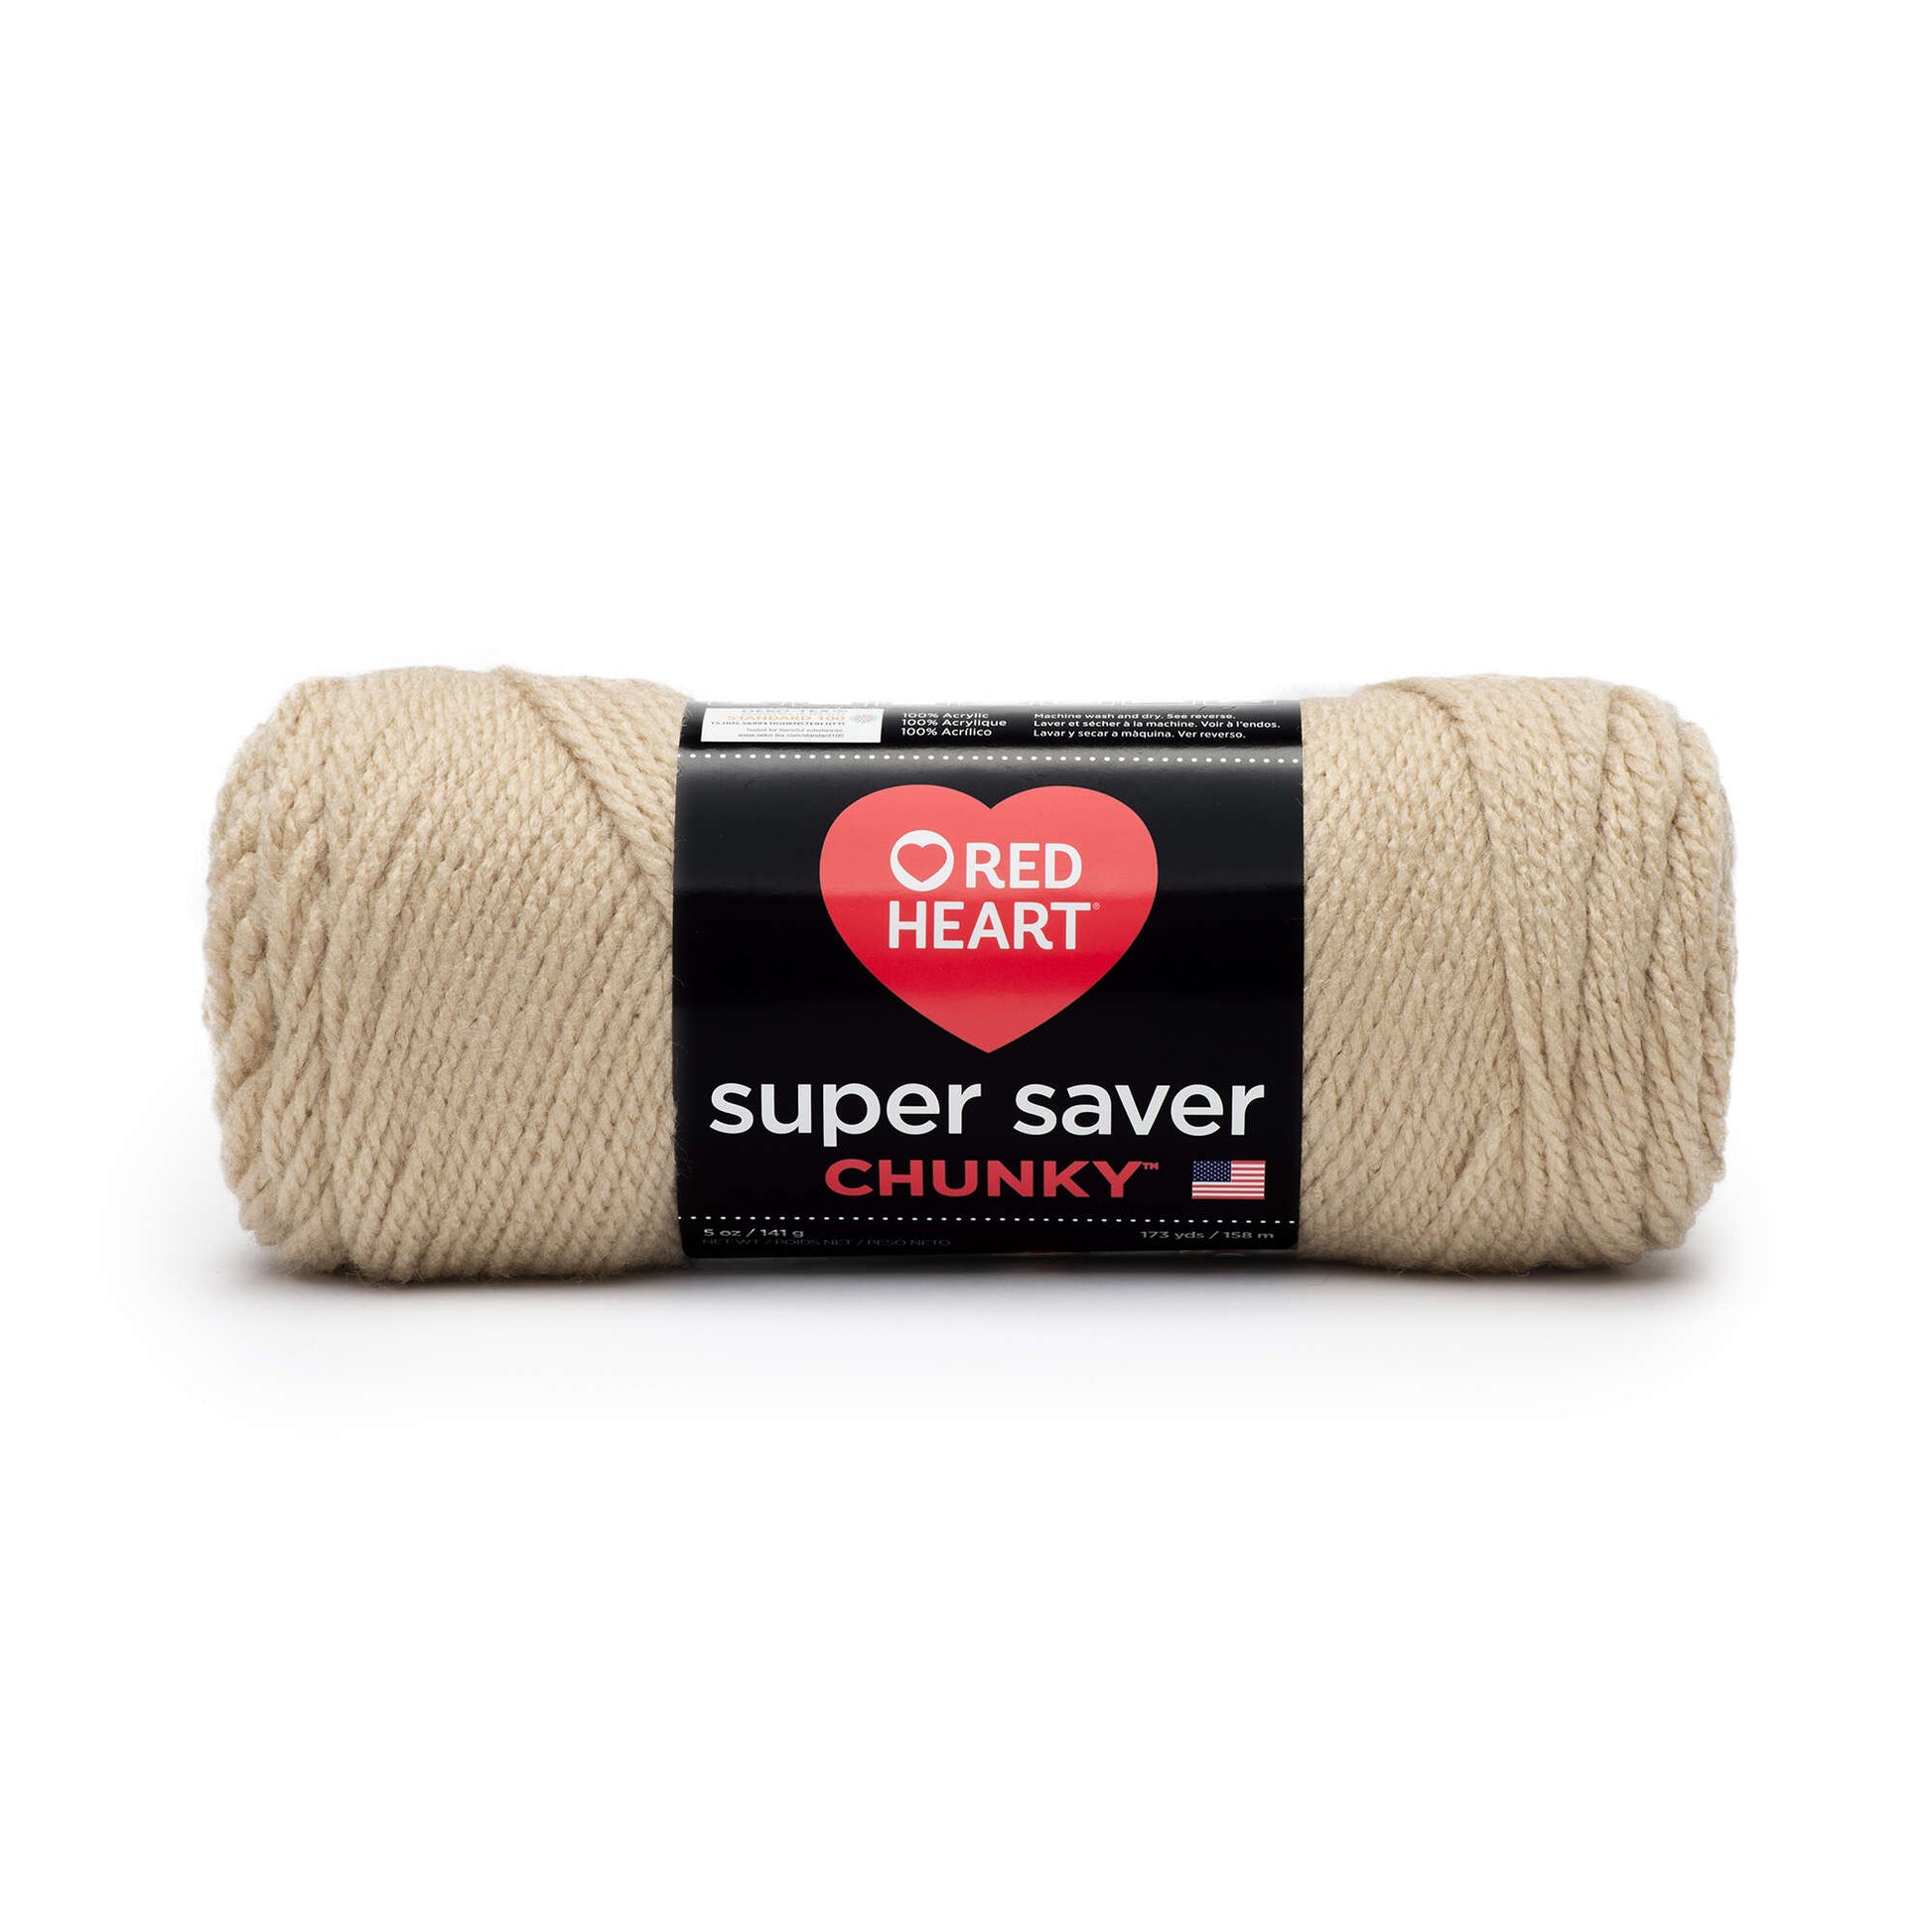 Red Heart Super Saver Chunky Yarn - Clearance shades